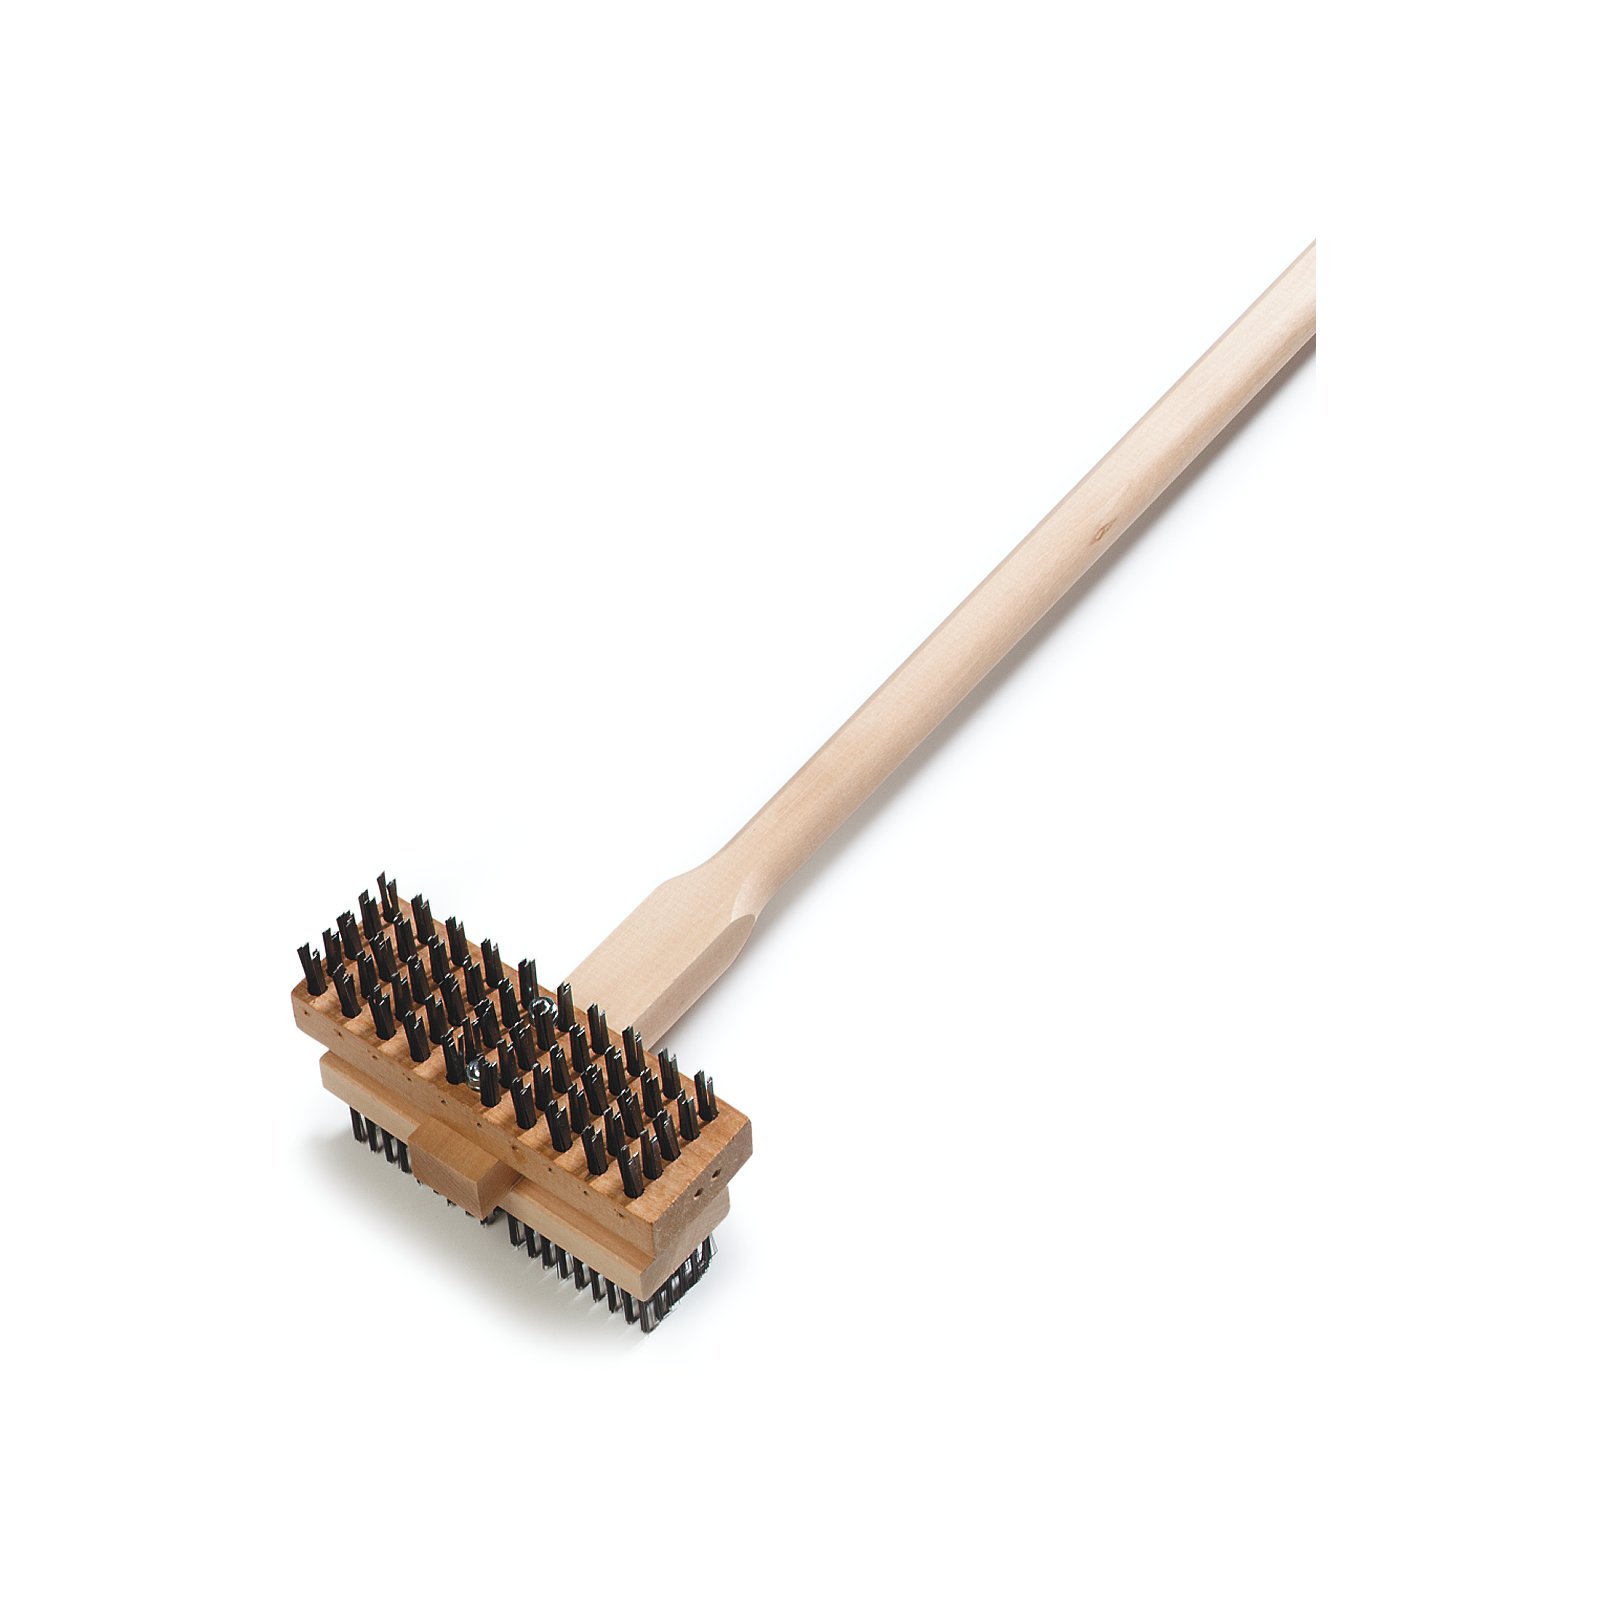 FMP 133-1174 26 Medium Bristle Broiler / Grill Cleaning Brush